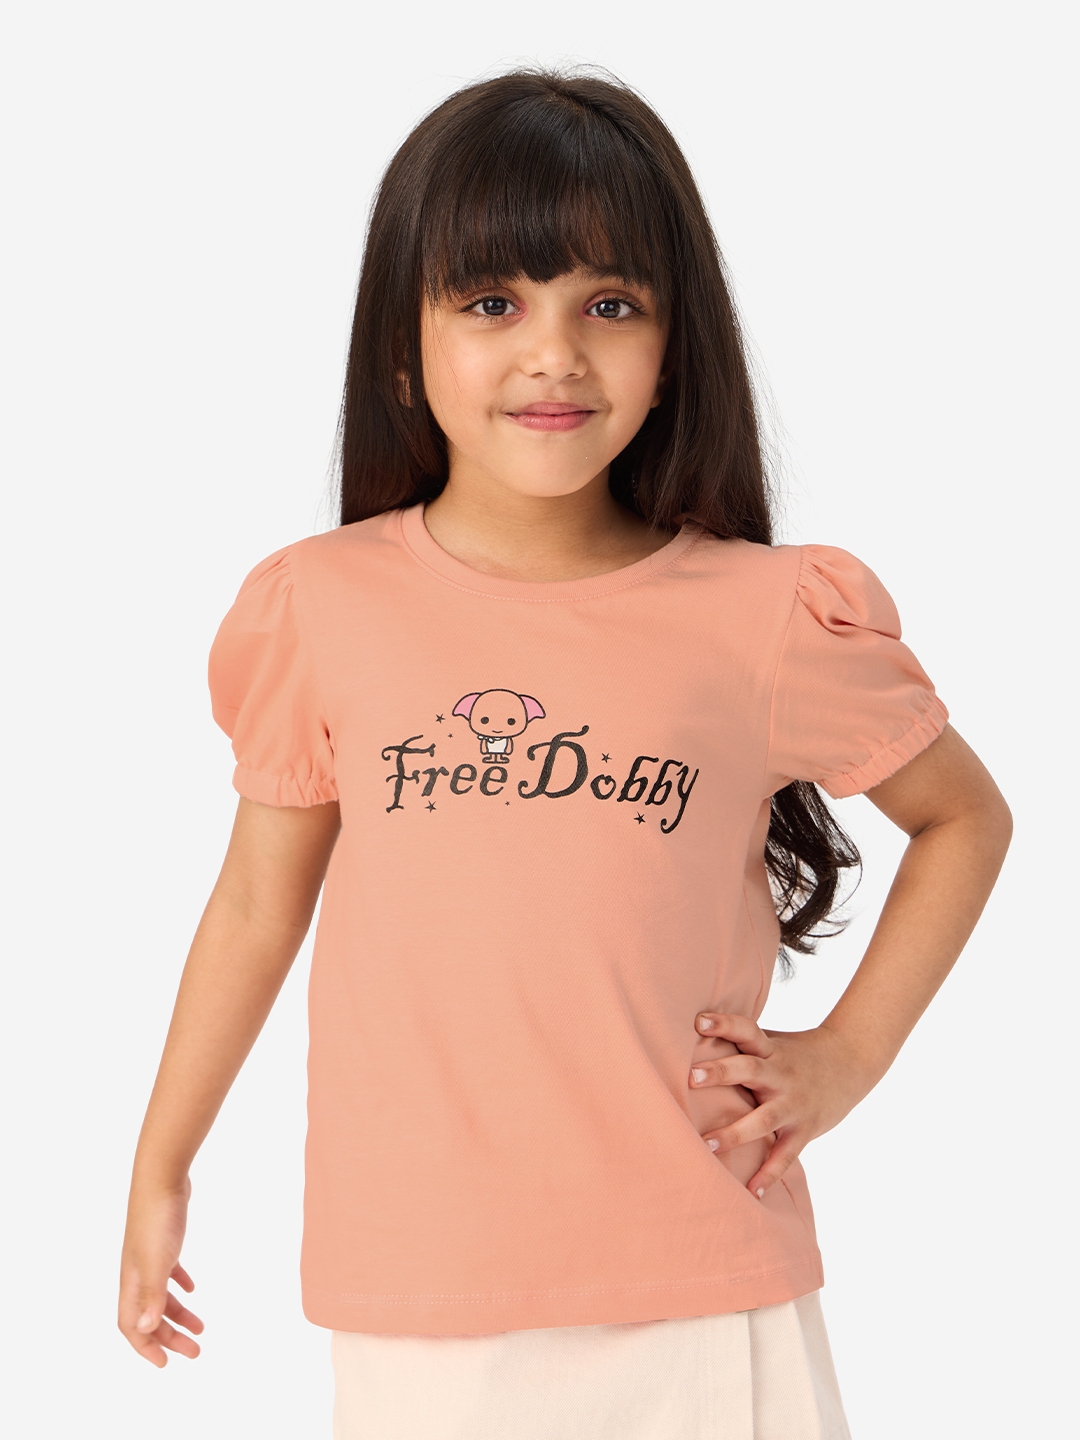 Girls Harry Potter: Free Dobby Girls Cotton Puff Sleeve Tops